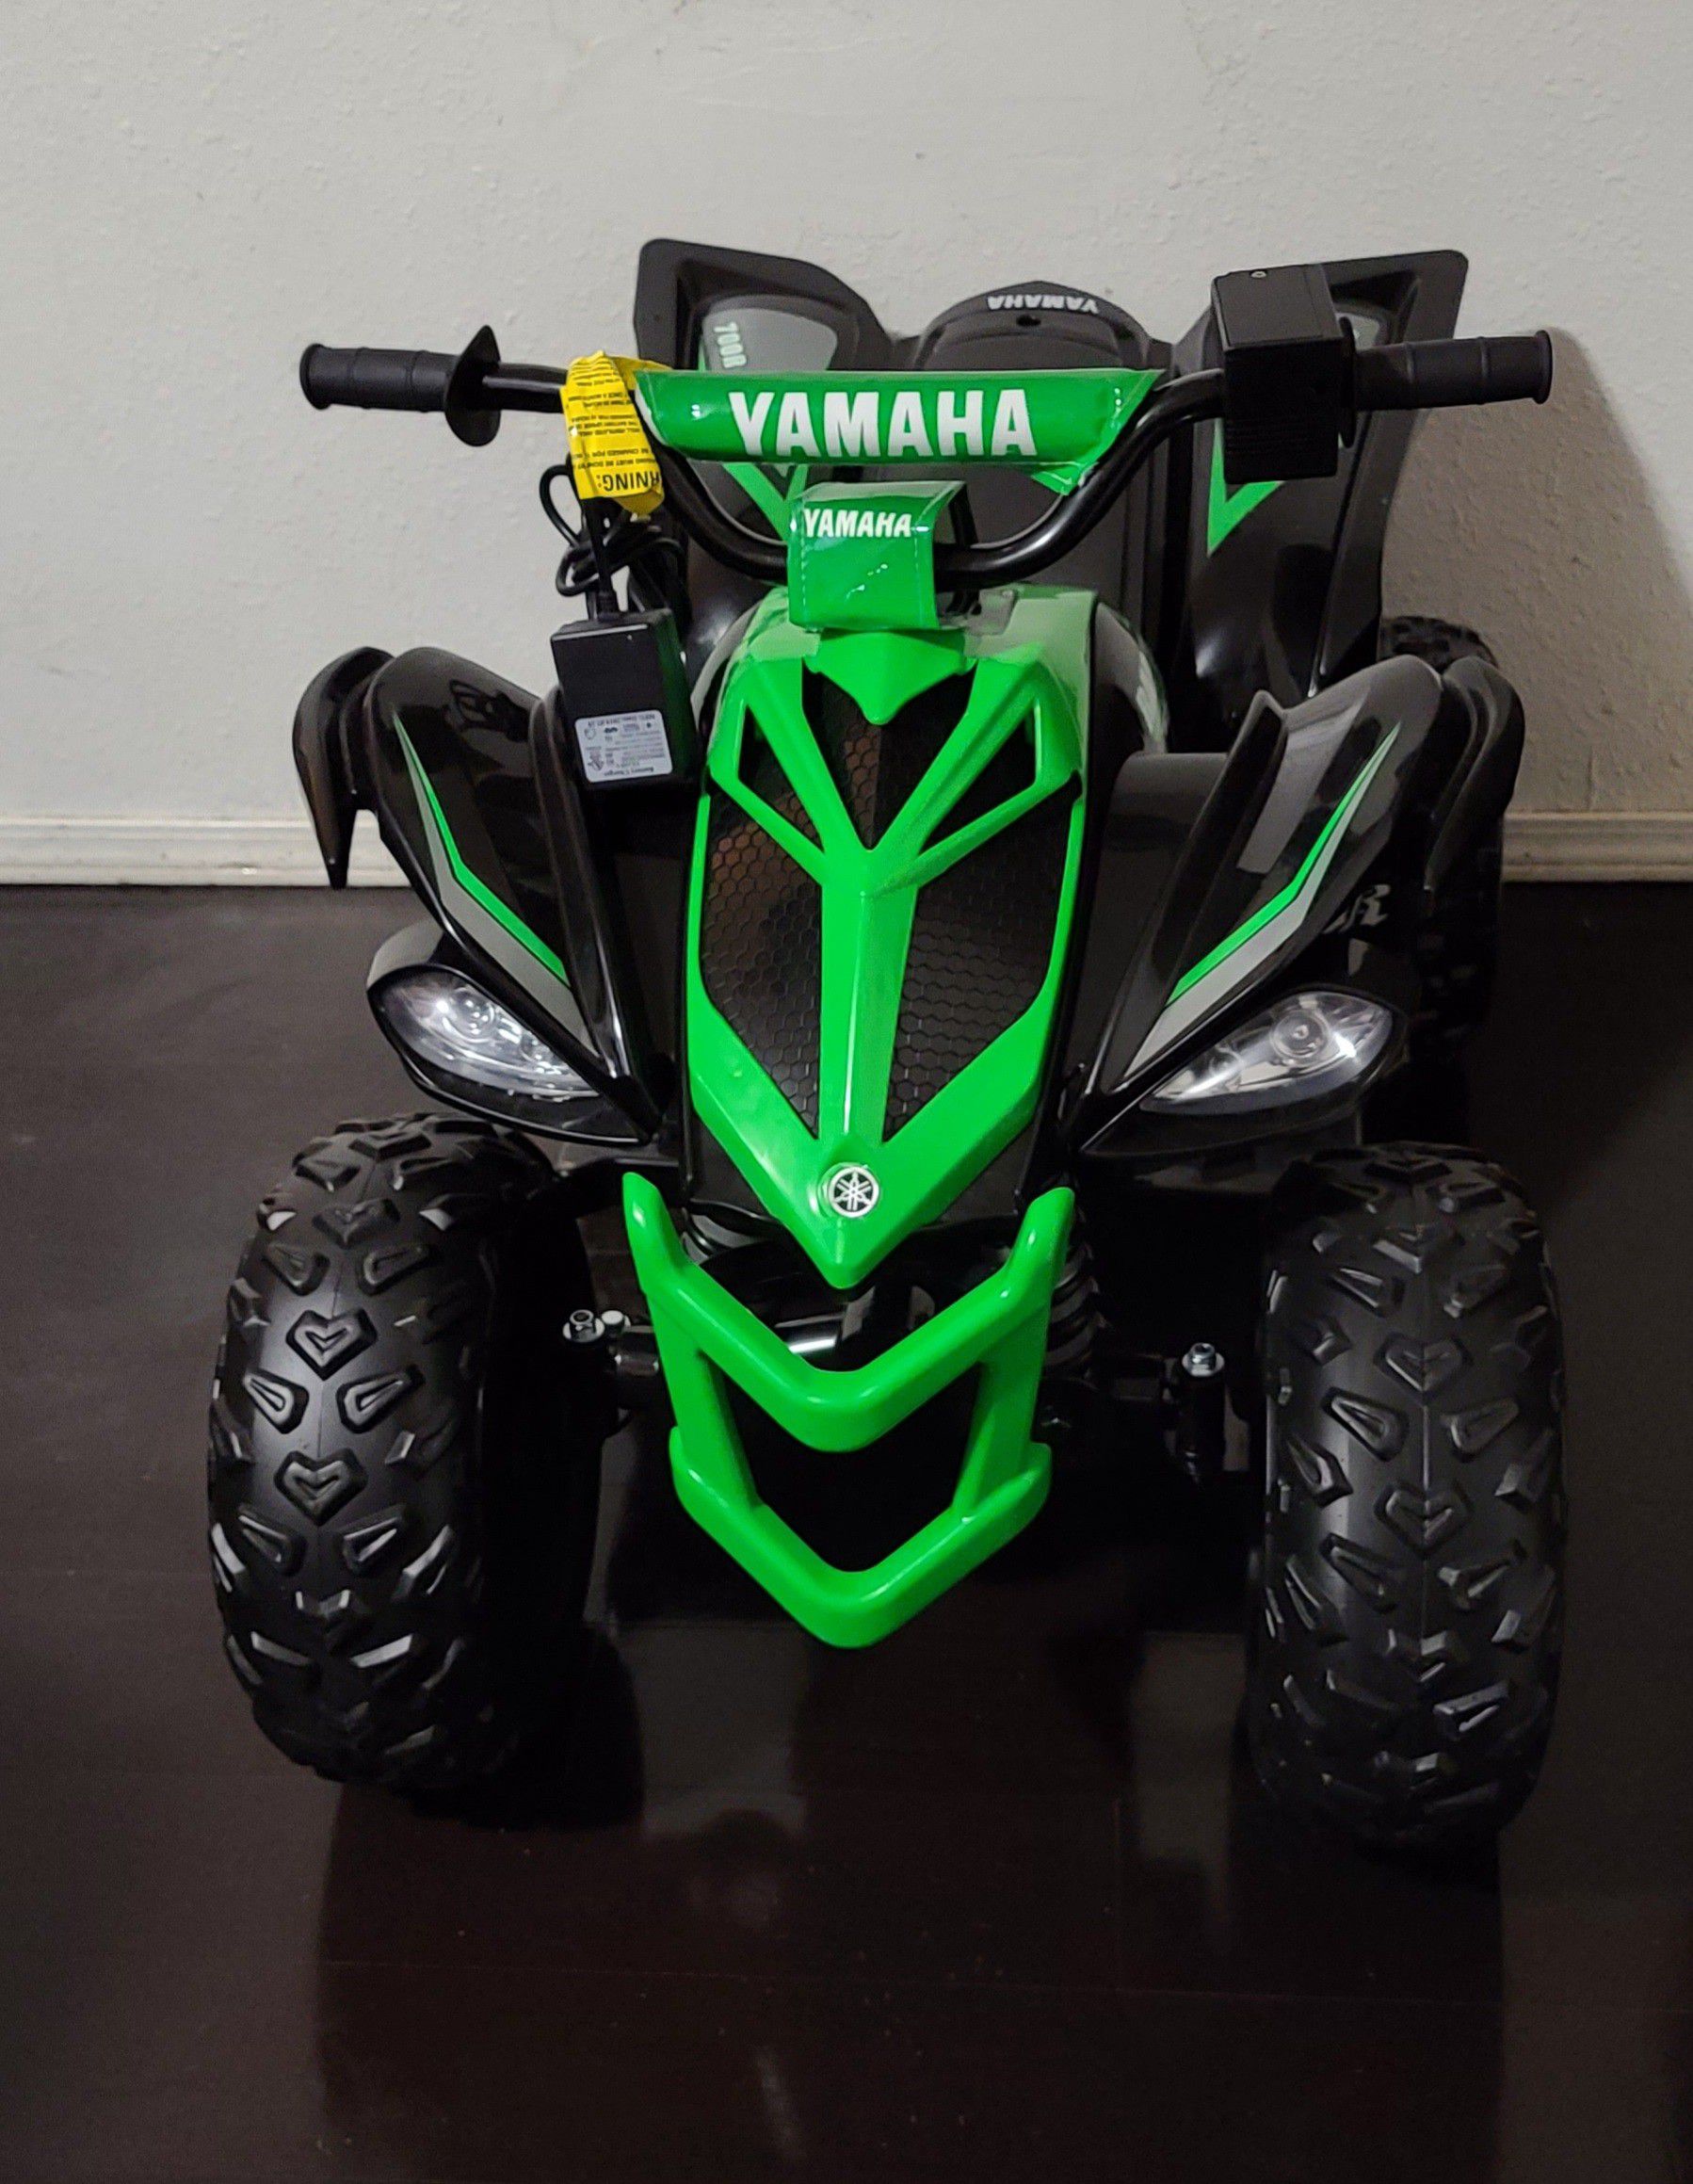 12 Volt Yamaha Raptor Battery Powered Ride-on Black/Green - NEW Custom Graphic Design!